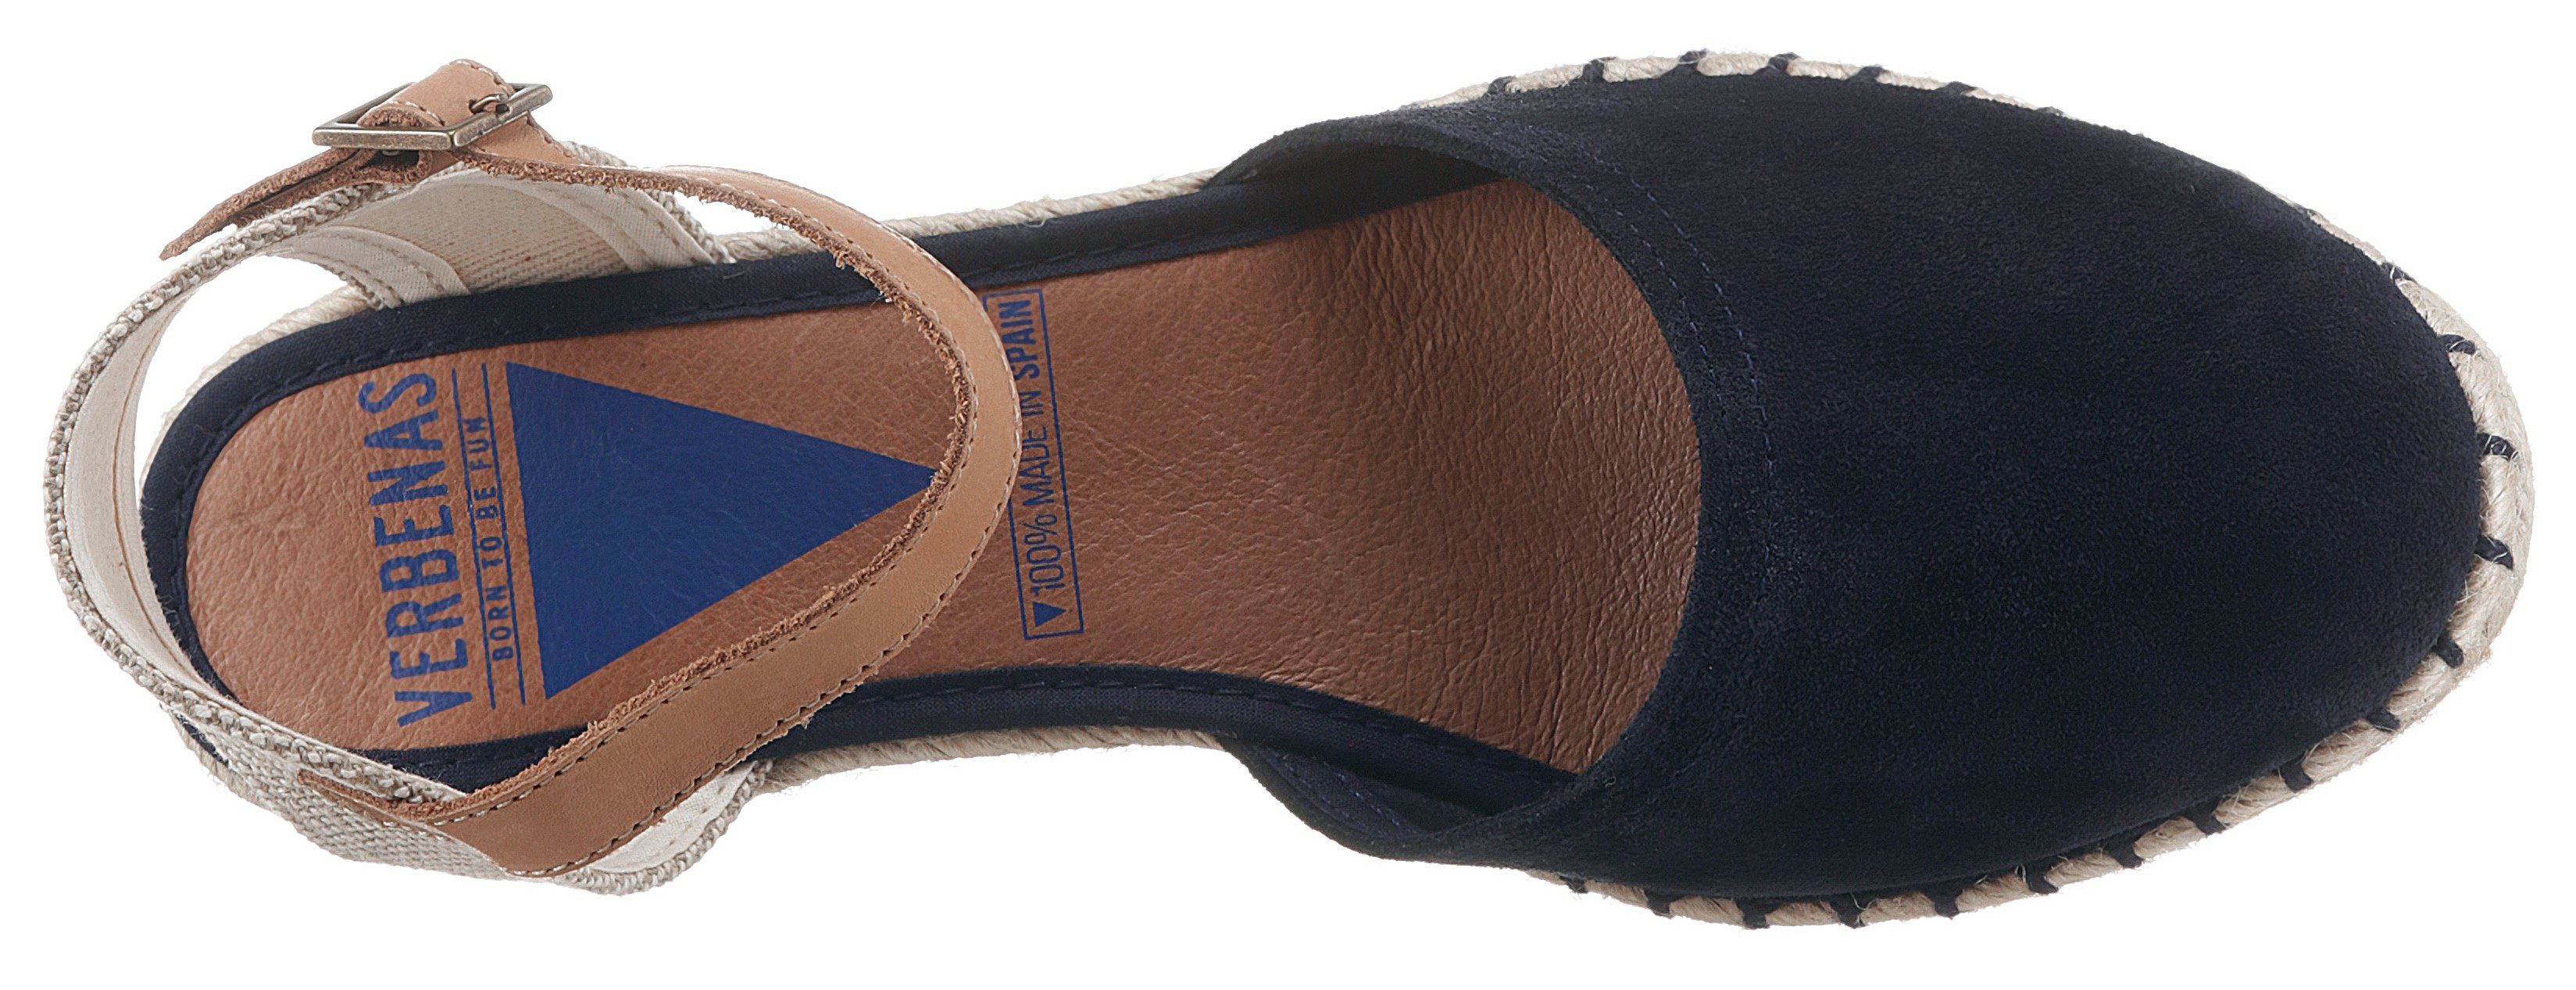 Sandalette mit bezogenem dunkelblau Keilabsatz VERBENAS Bast